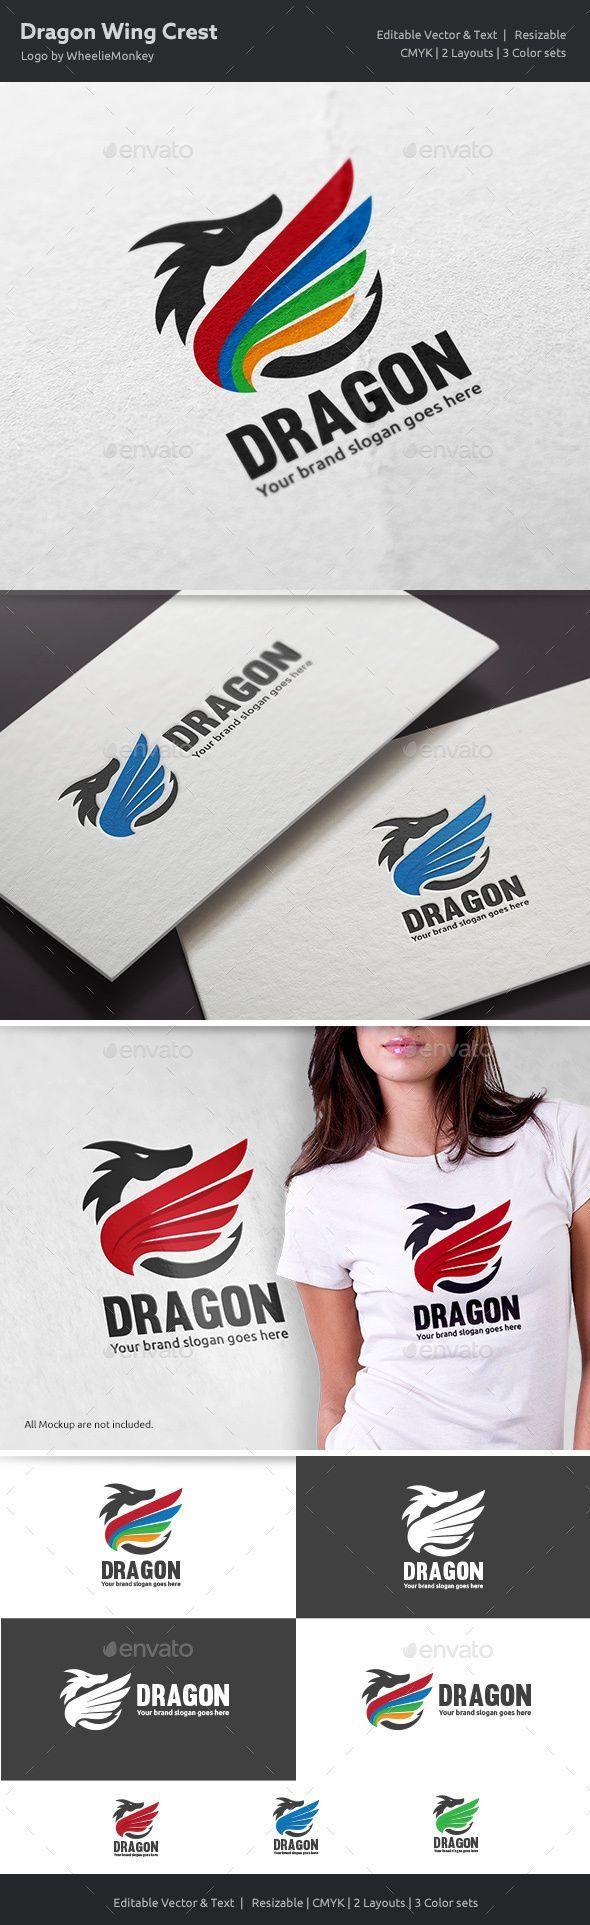 Dragon Wing Logo - Dragon Wing Crest Logo - Crests Logo Templates Download here : https ...